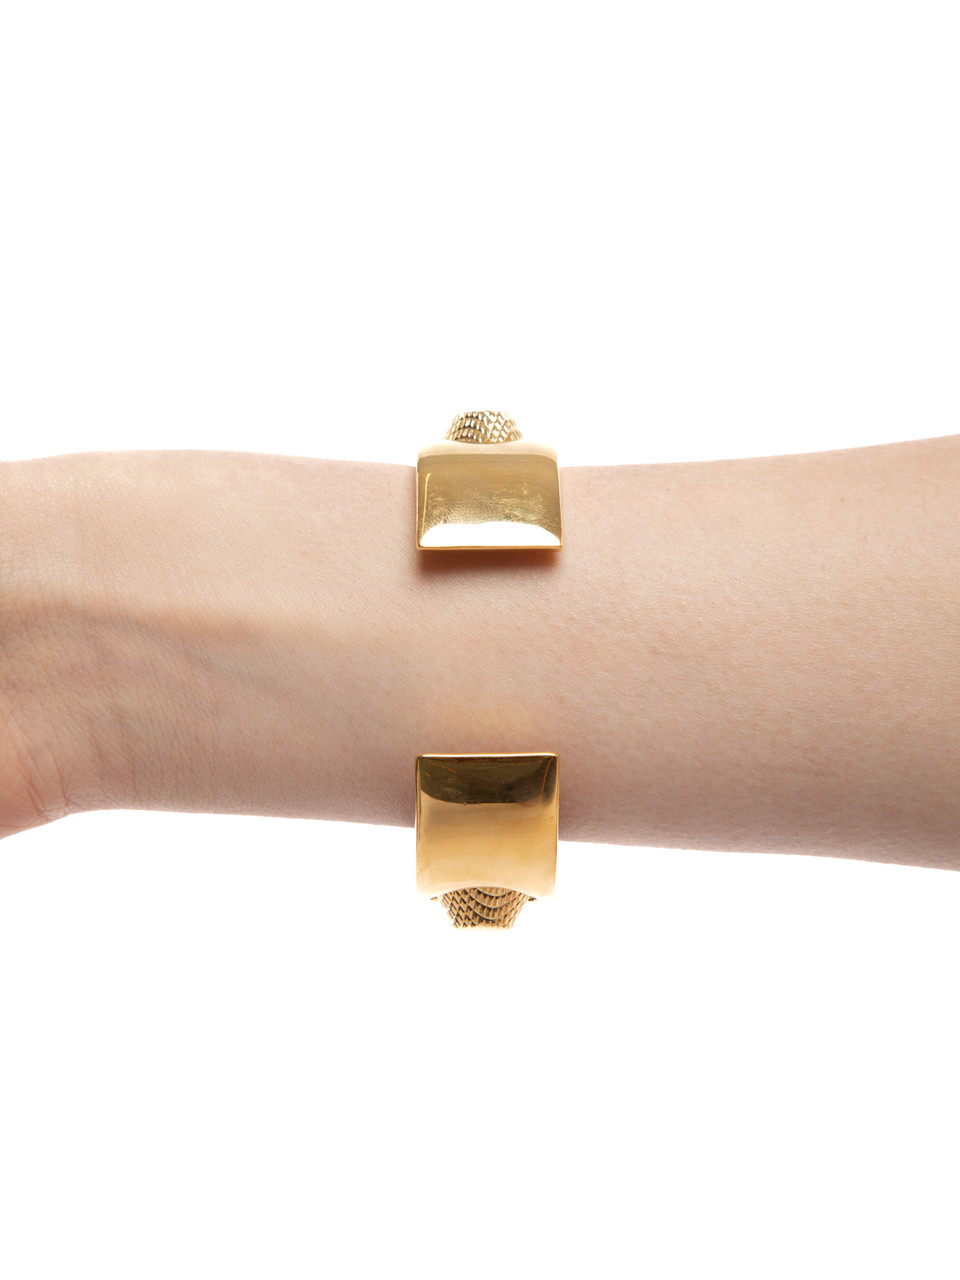 Balenciaga Gold Textured Spike Metal Studded Charm Cuff Bracelet